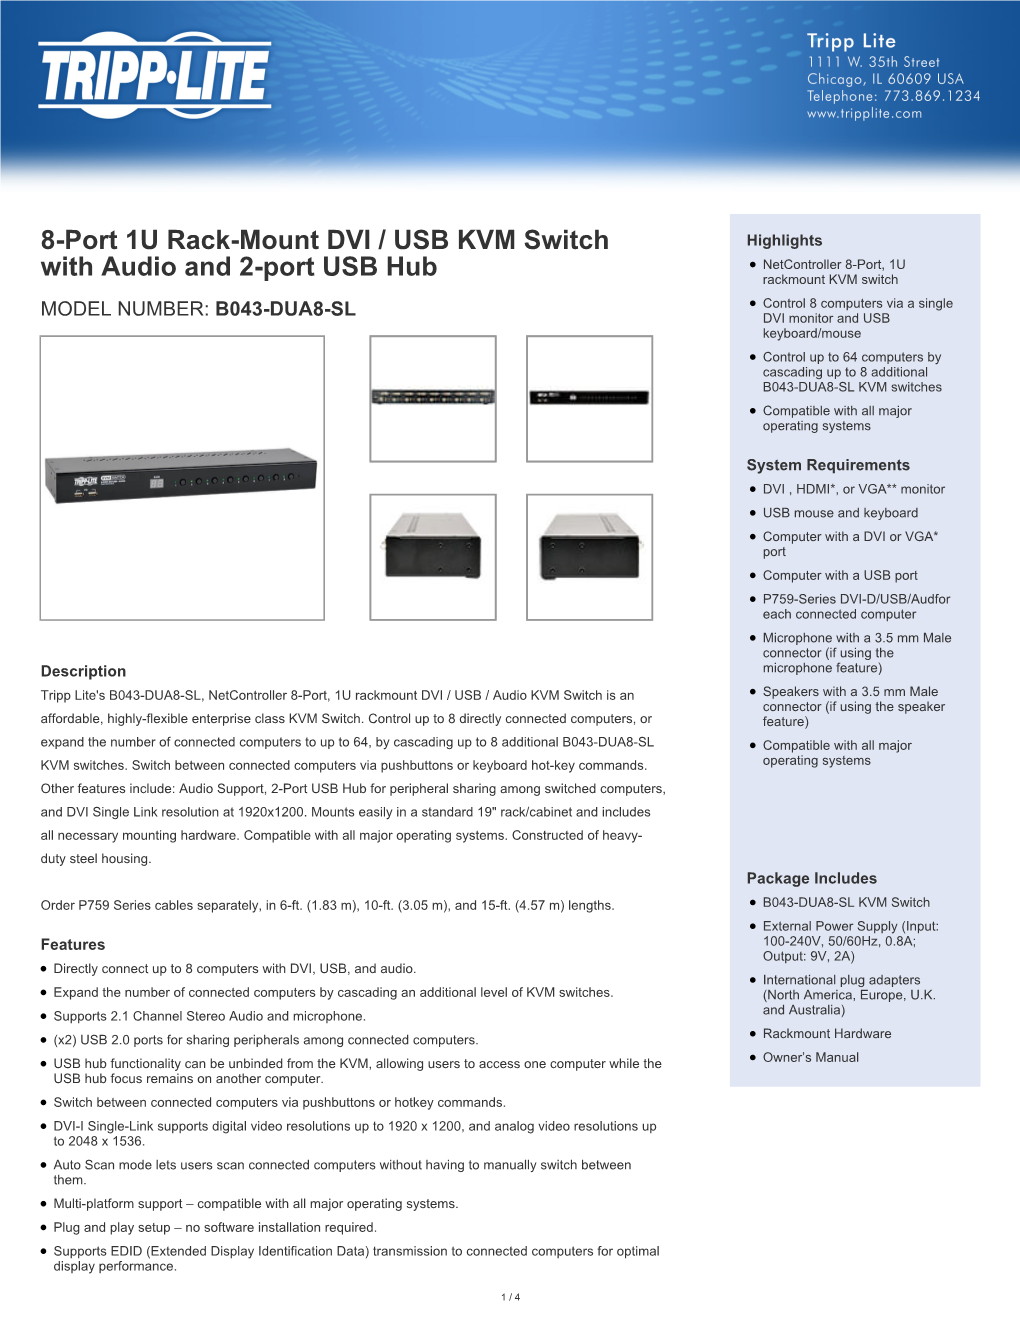 8-Port 1U Rack-Mount DVI / USB KVM Switch with Audio and 2